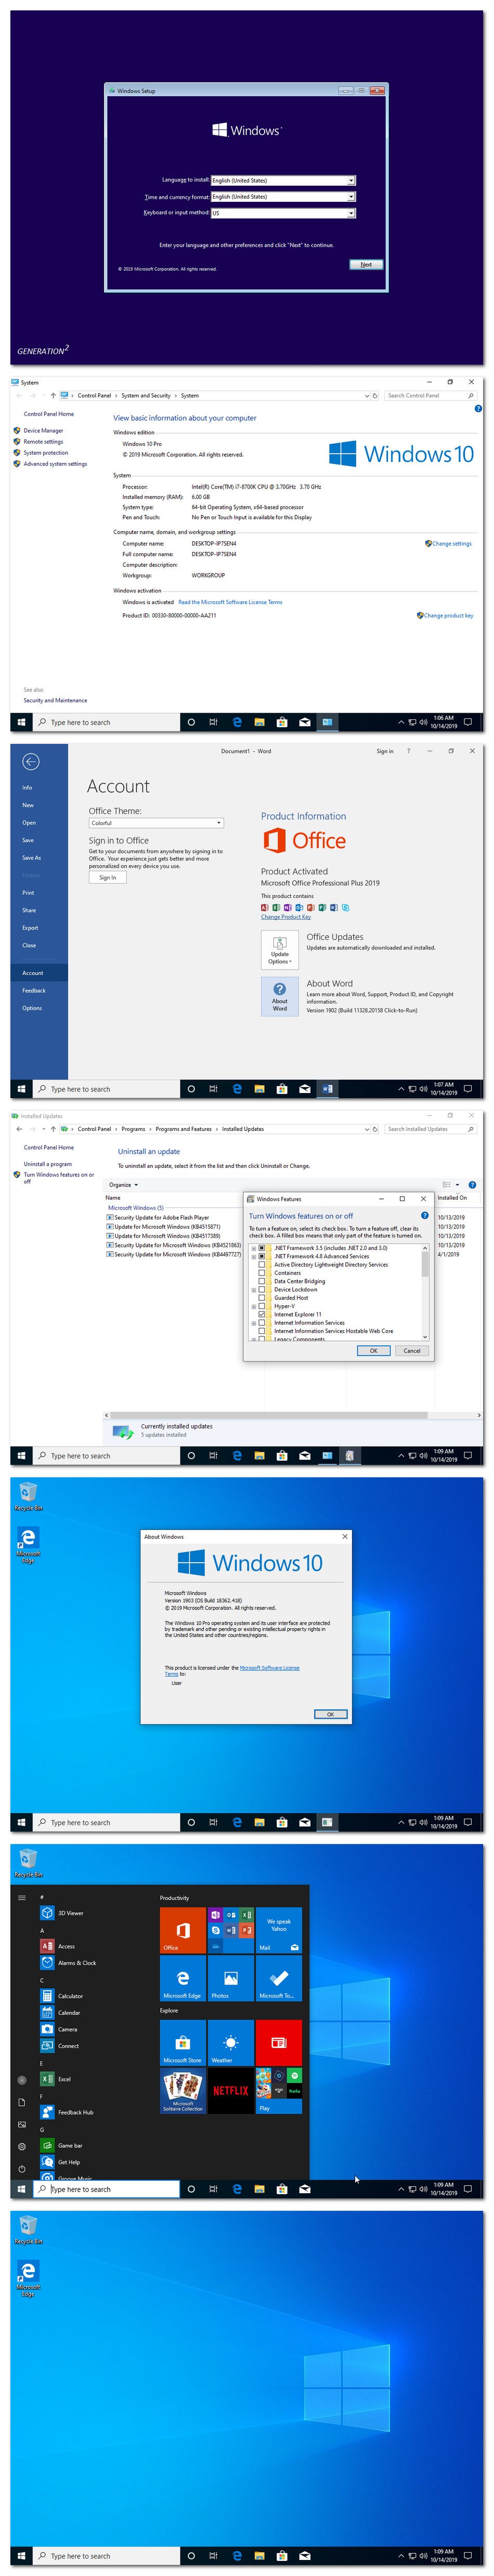 windows 10 pro 64 bit iso 2019 download